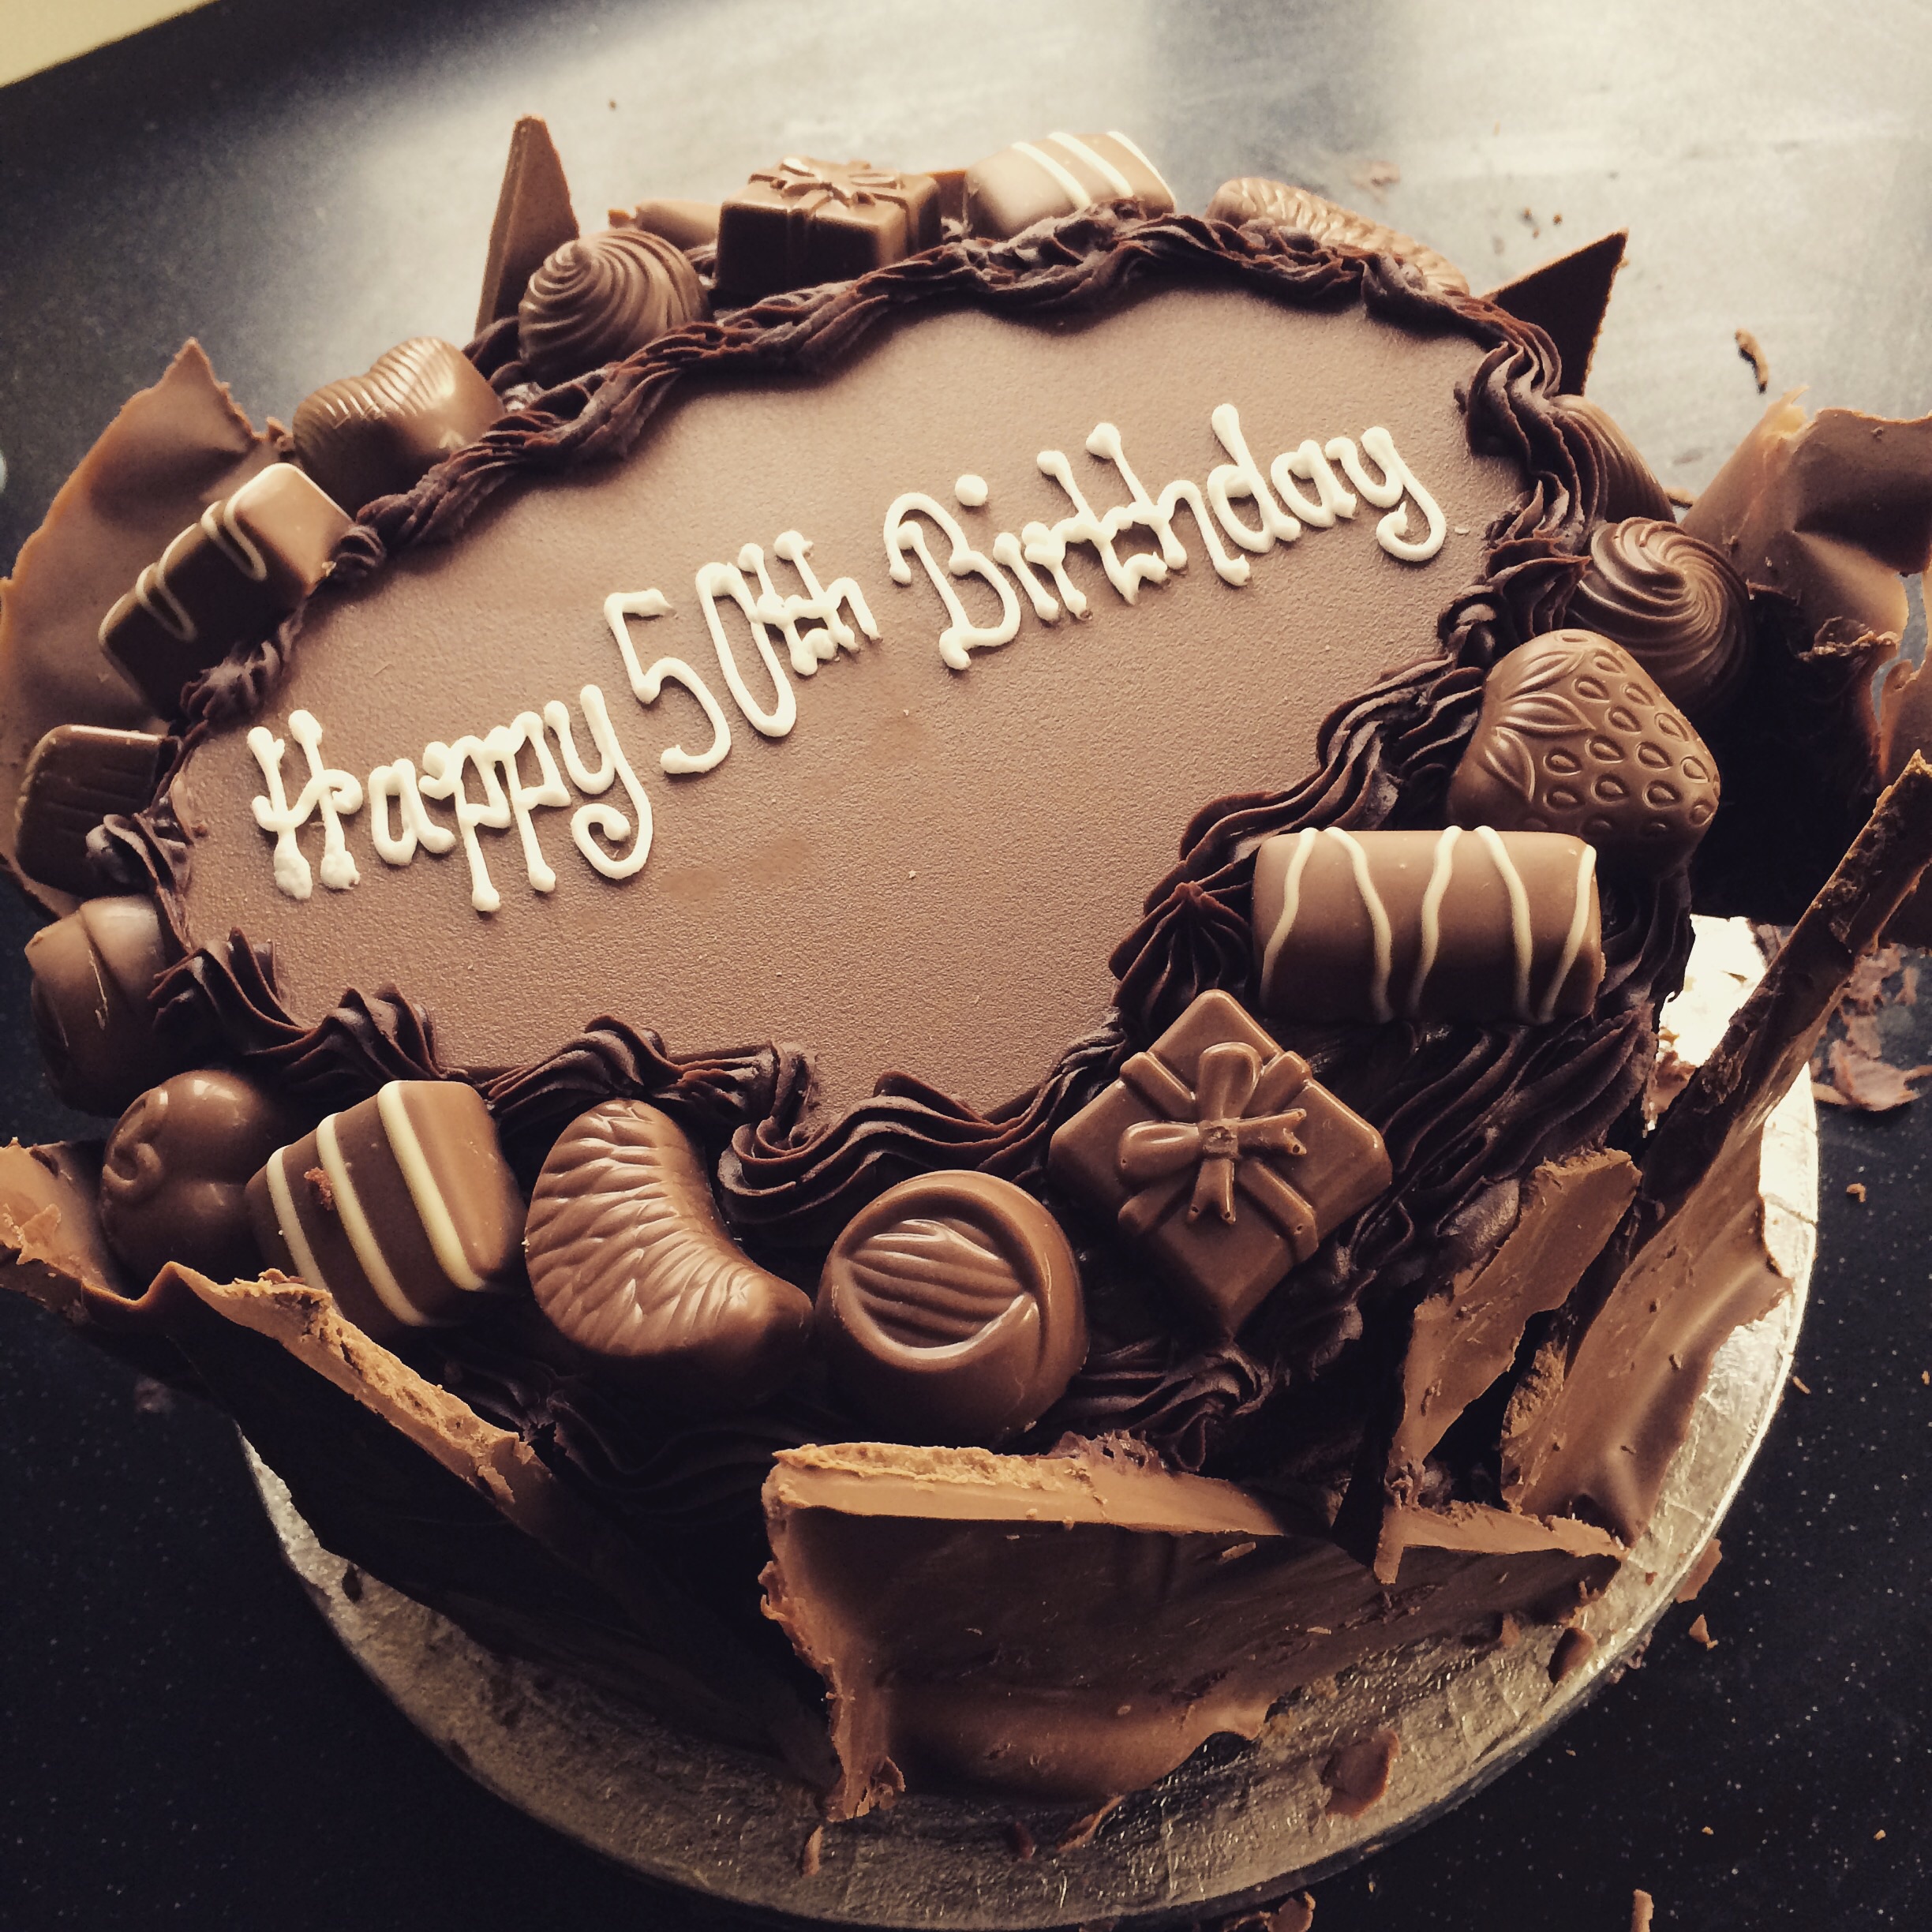 Chocoholic birthday fudge cake - The Great British Bake Off | The Great ...